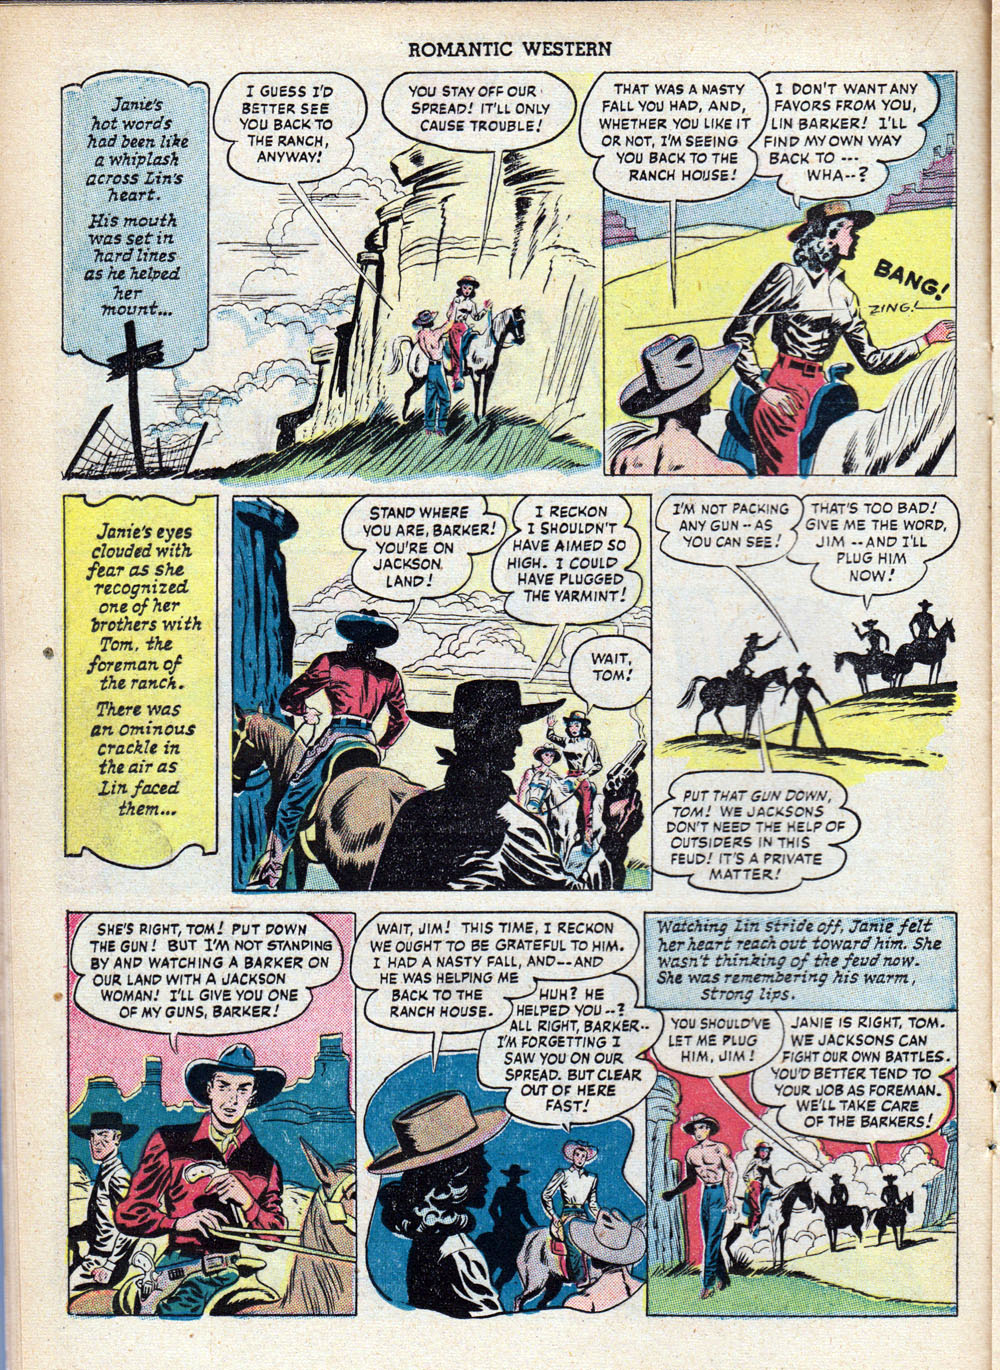 Read online Romantic Western comic -  Issue #1 - 16